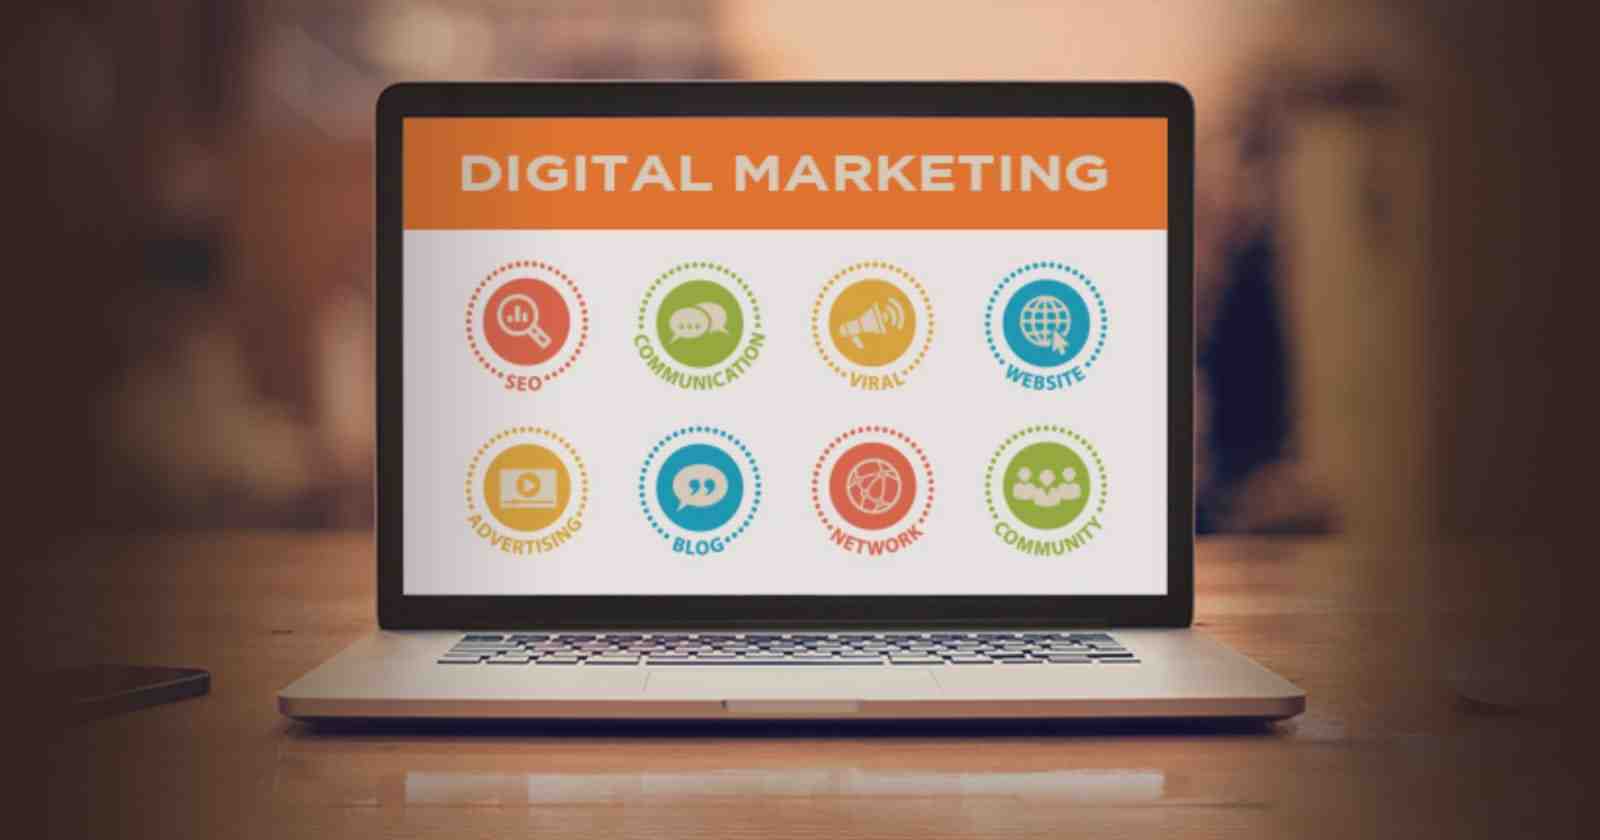 Is digital marketing a good career?